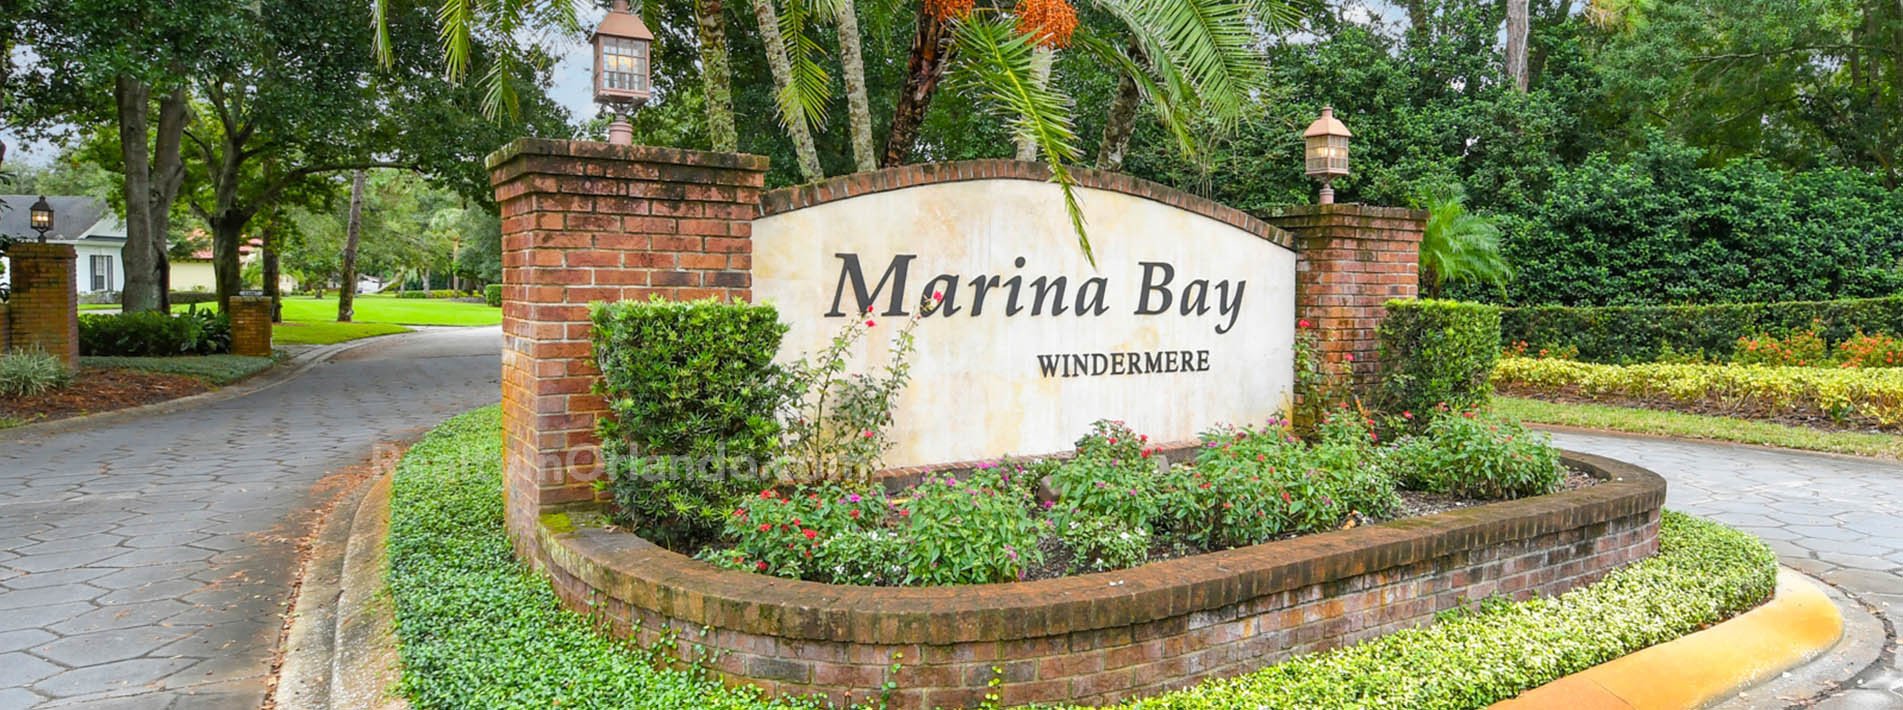 Marina Bay Windermere